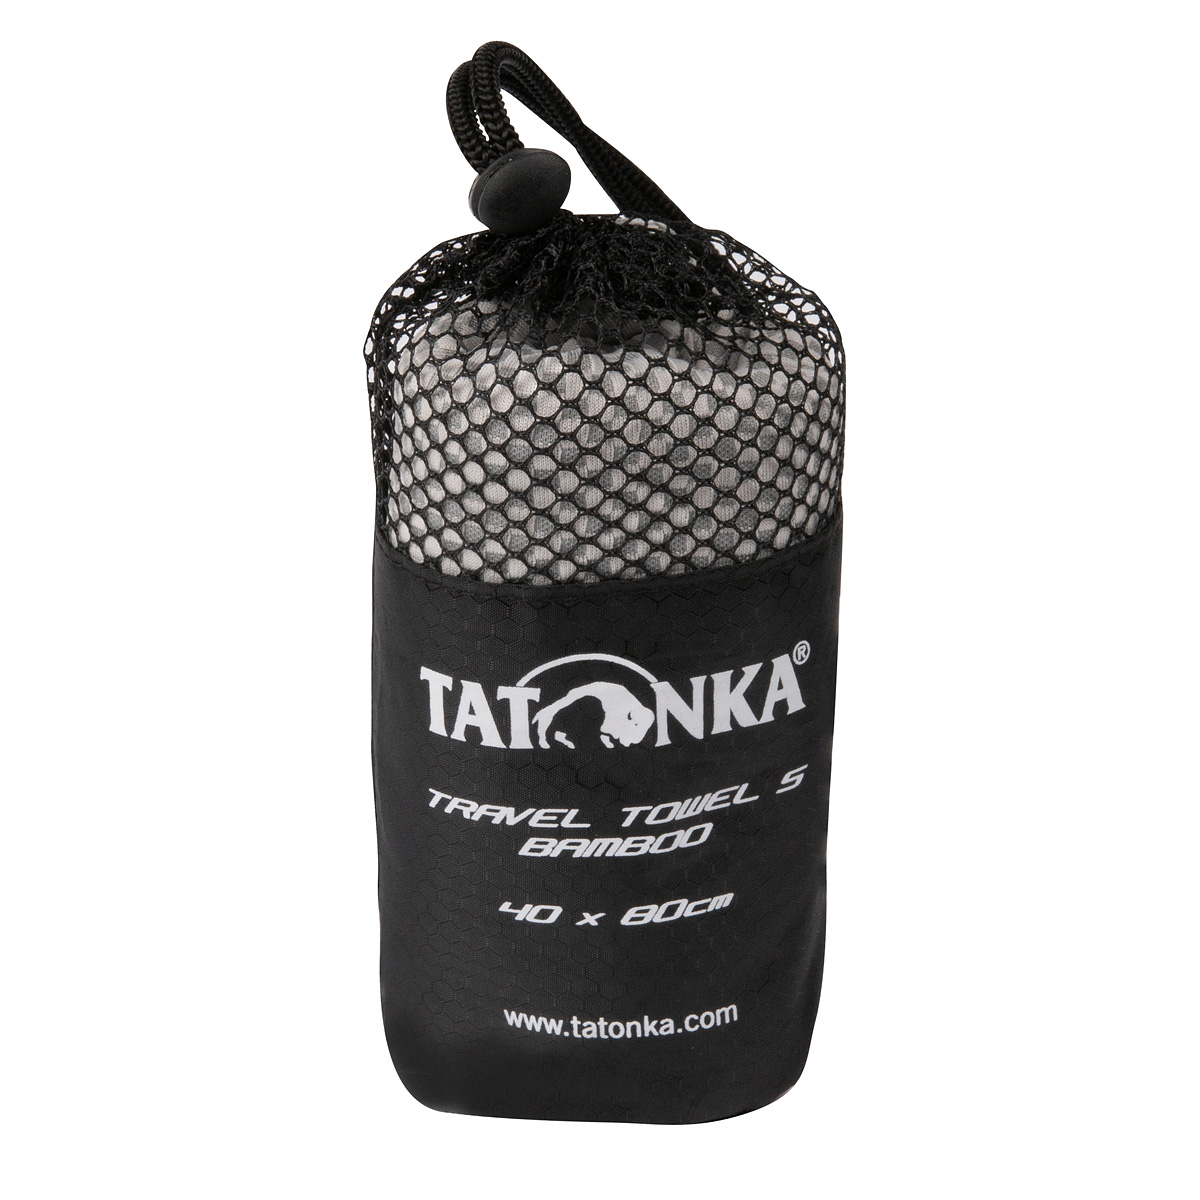 Tatonka Travel Towel Bamboo S grey grau Reisezubehör 4013236305067